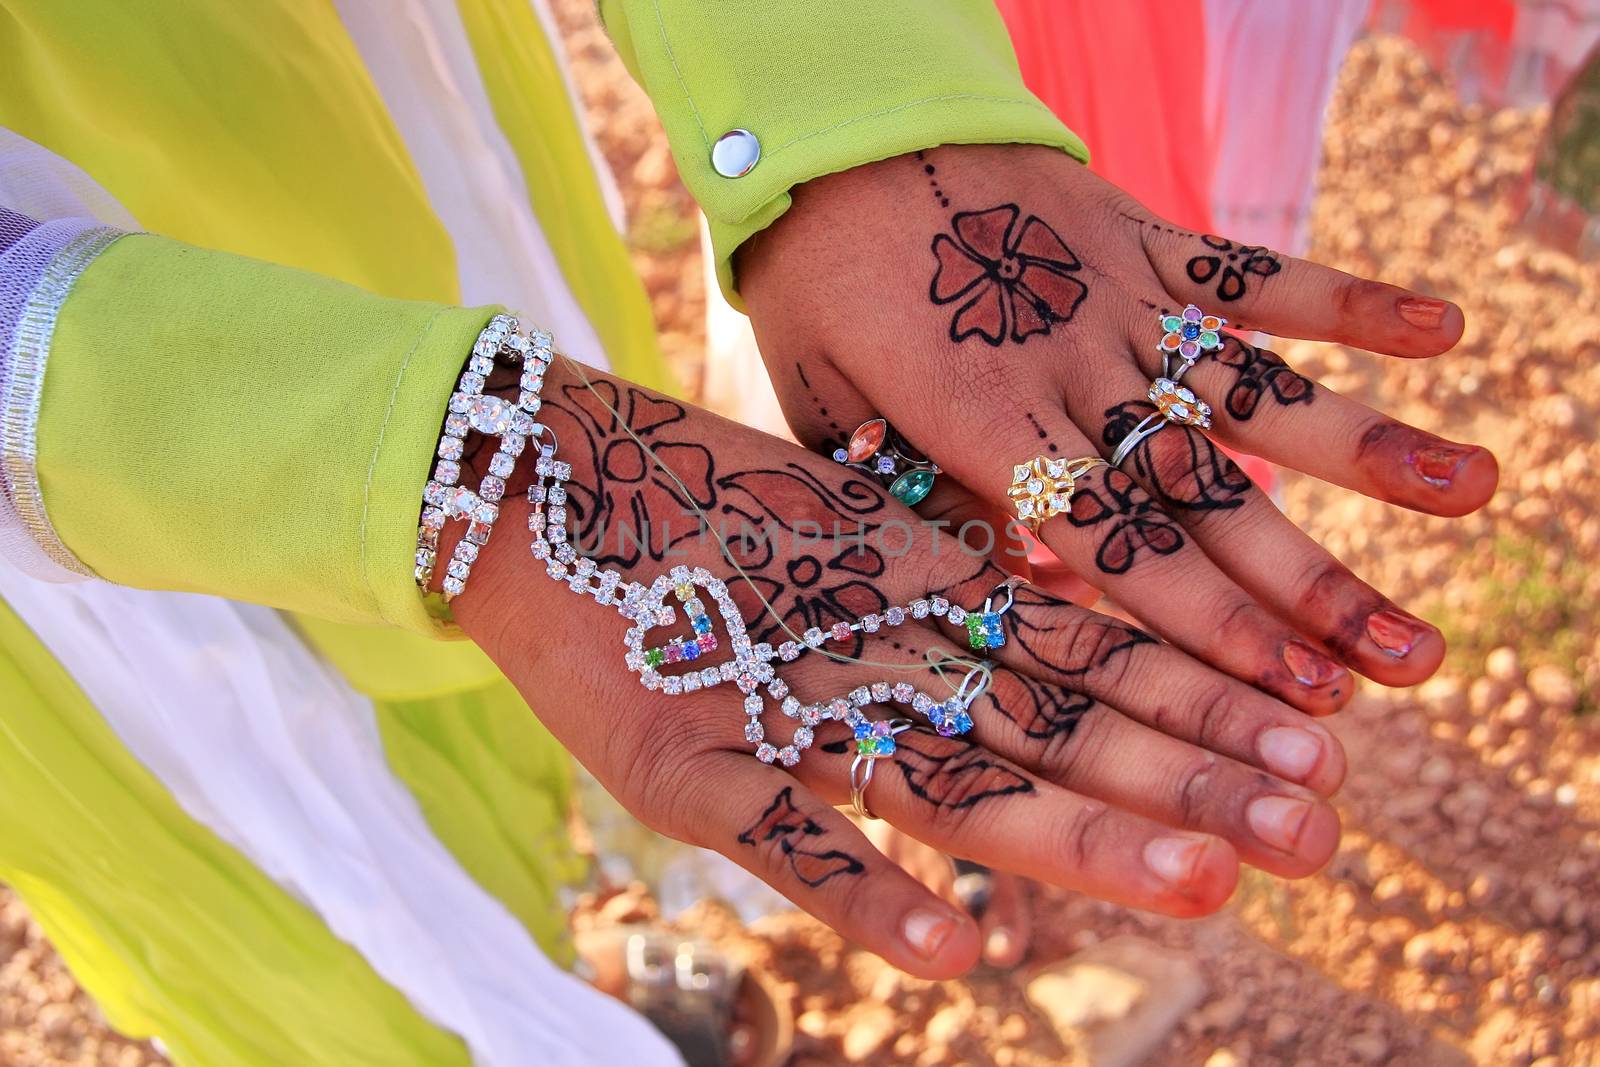 Local girl showing henna painting, Khichan village, Rajasthan, India